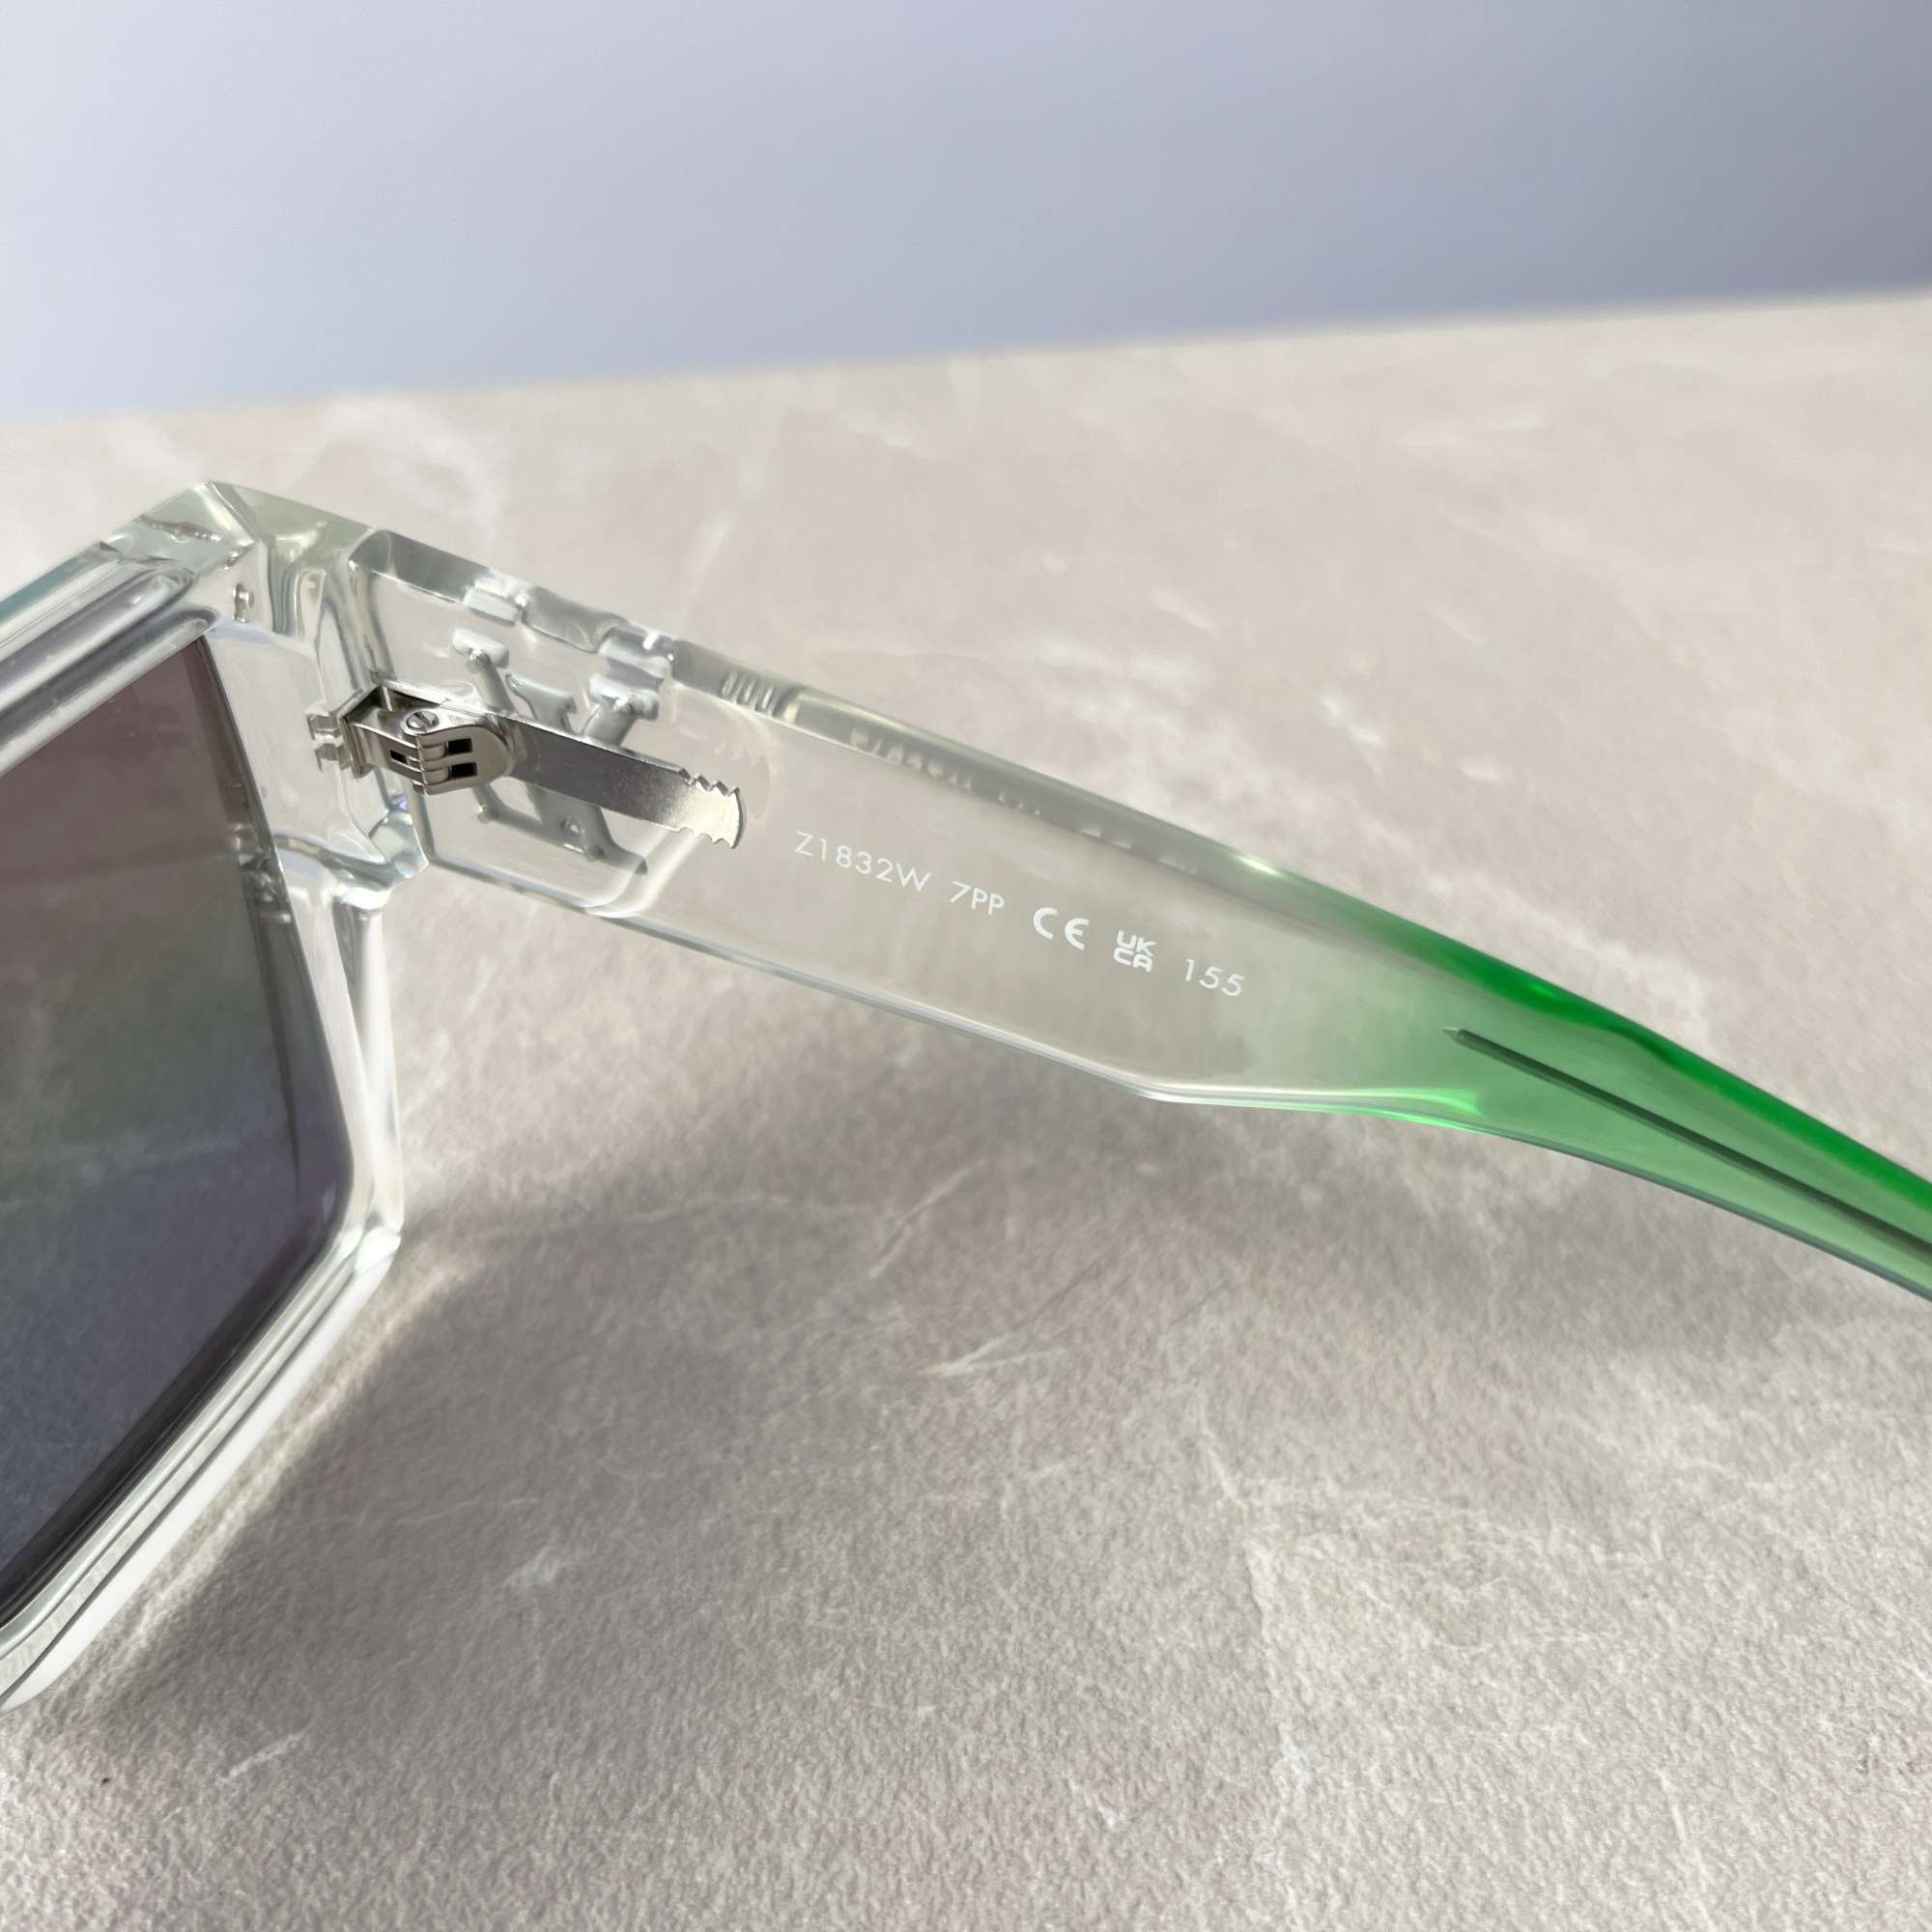 Louis Vuitton Cyclone transparentné slnečné okuliare v komplet balení